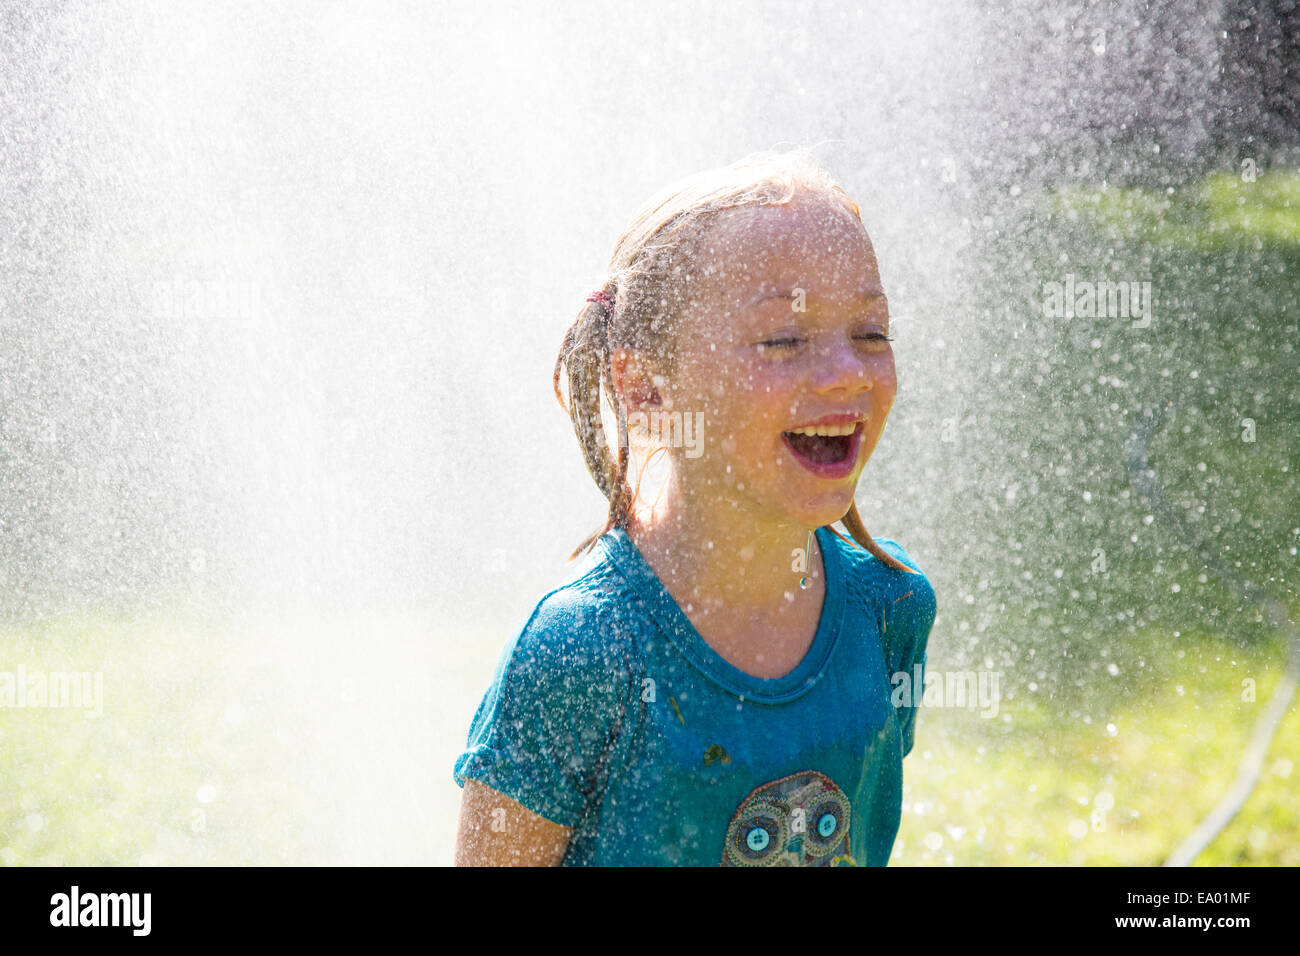 Girl getting splashed by water sprinkler in garden Stock Photo